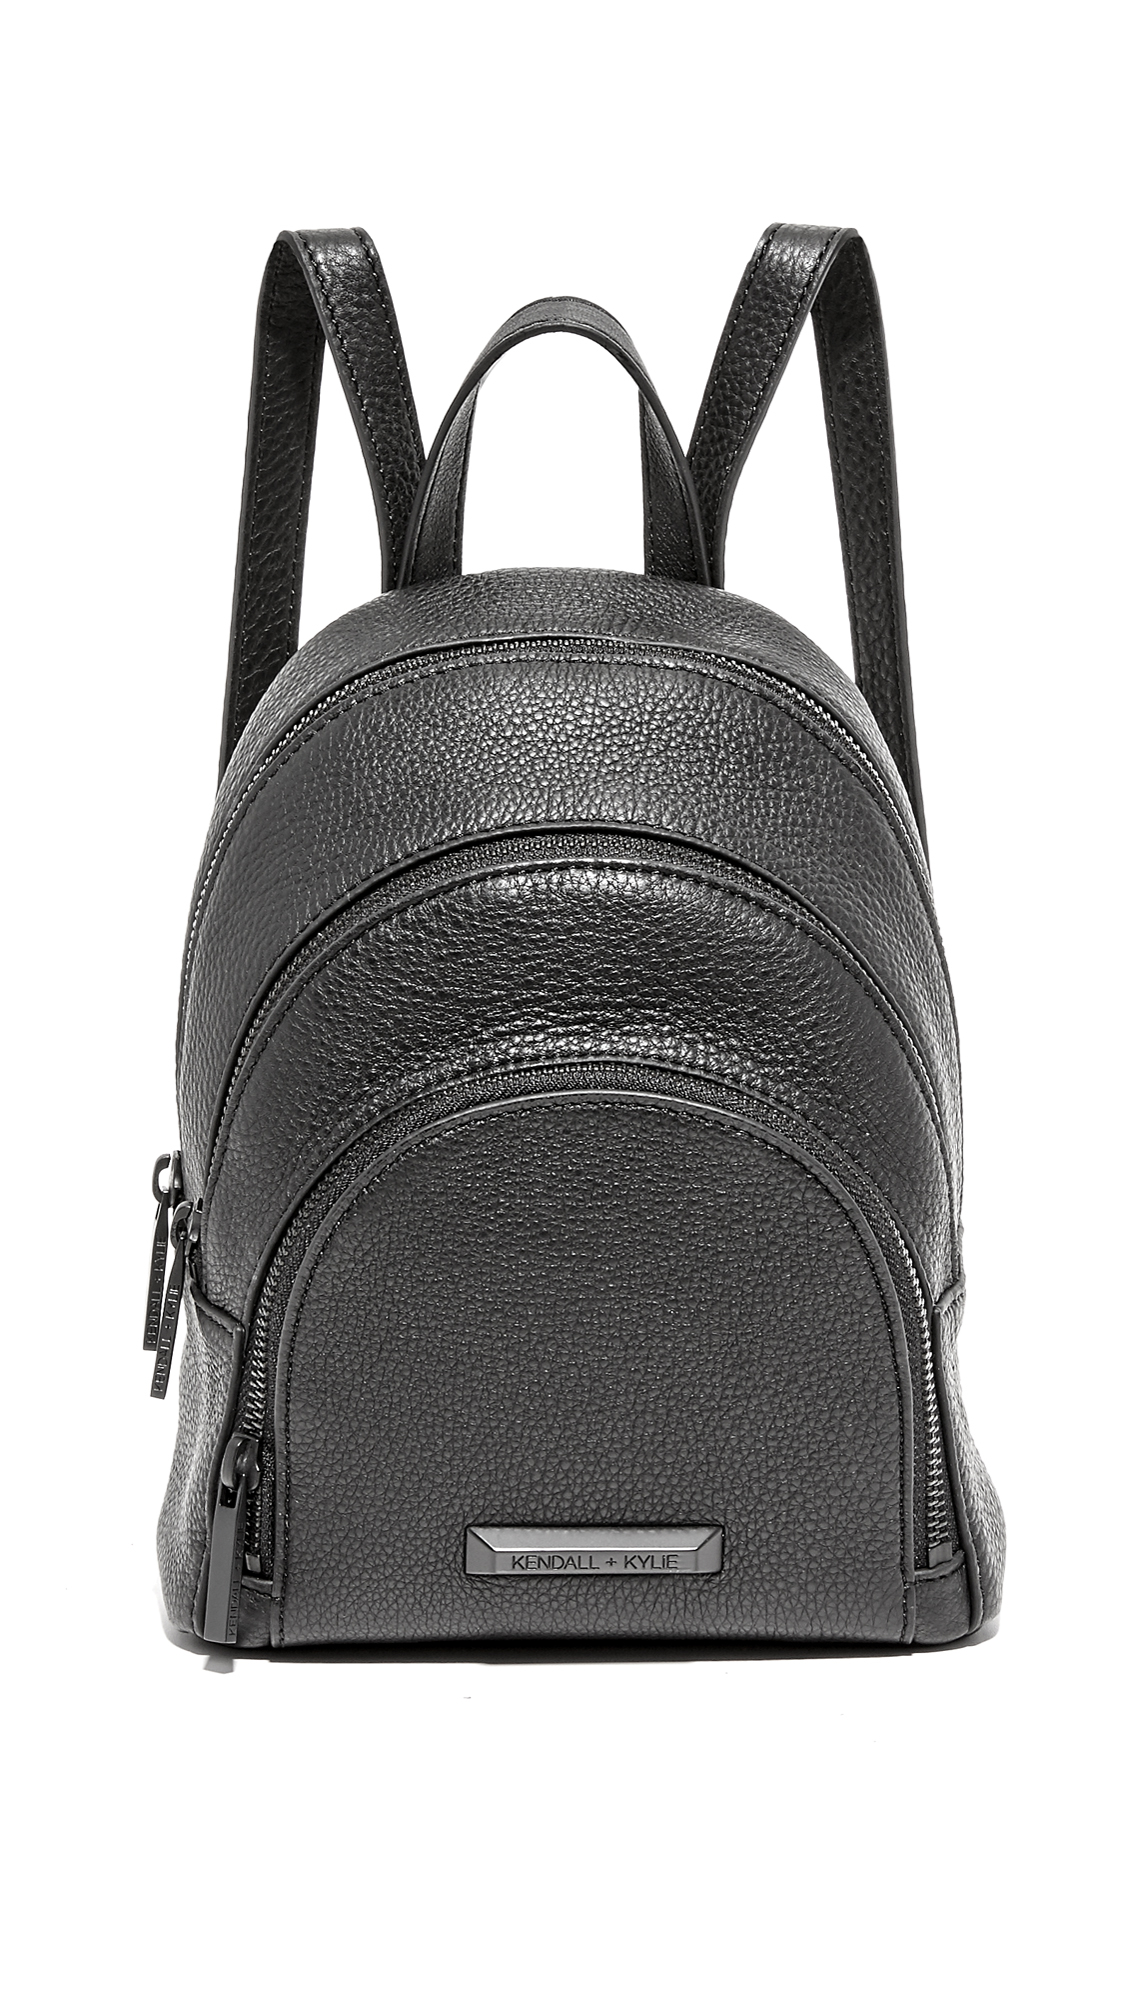 Lyst - Kendall + Kylie Mini Sloane Backpack in Black